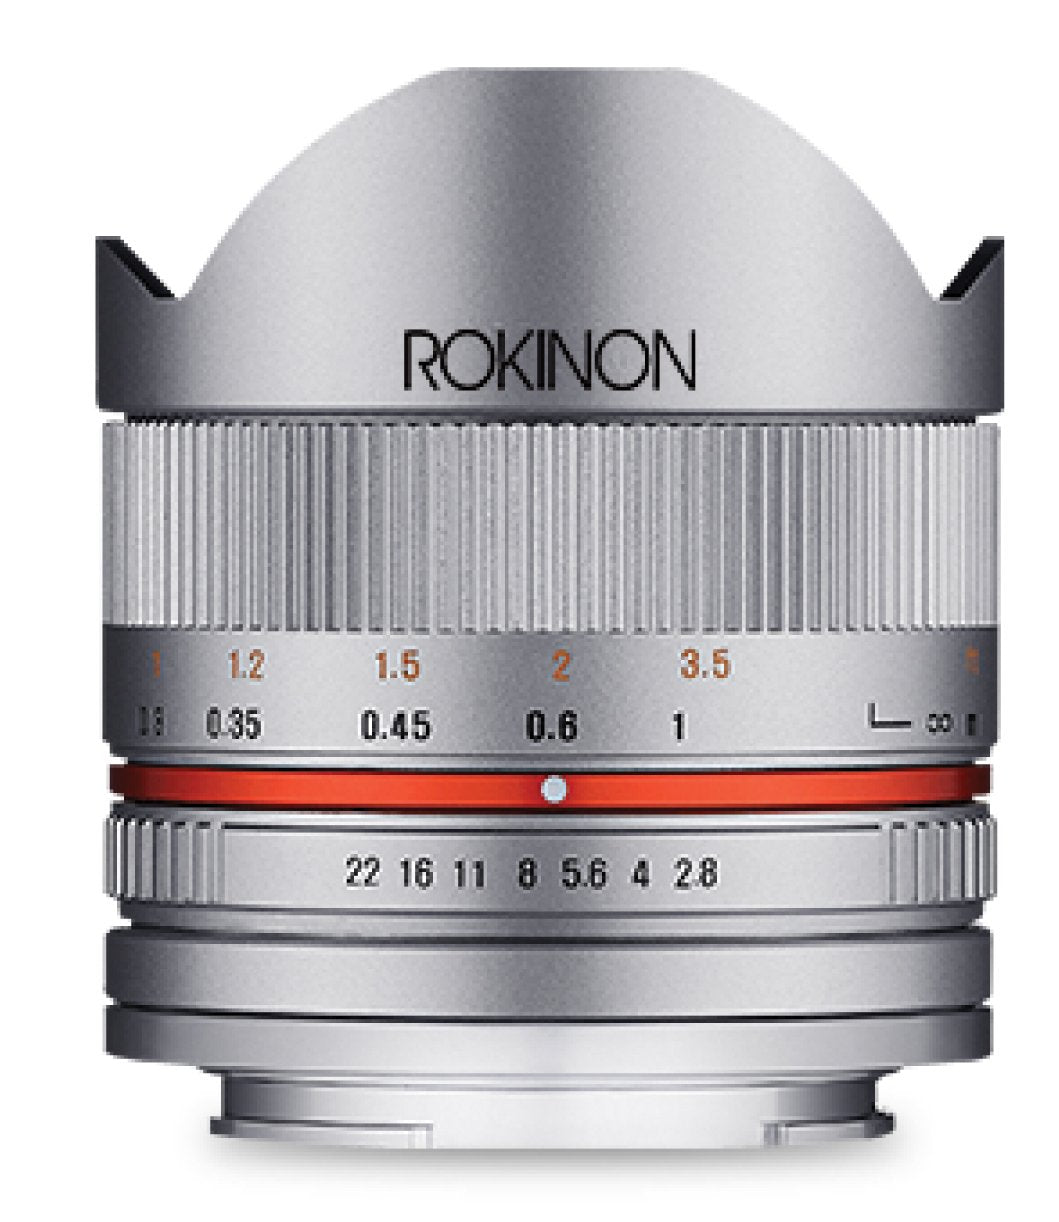 8mm F2.8 Compact Fisheye - Rokinon Lenses – Rokinonlenses